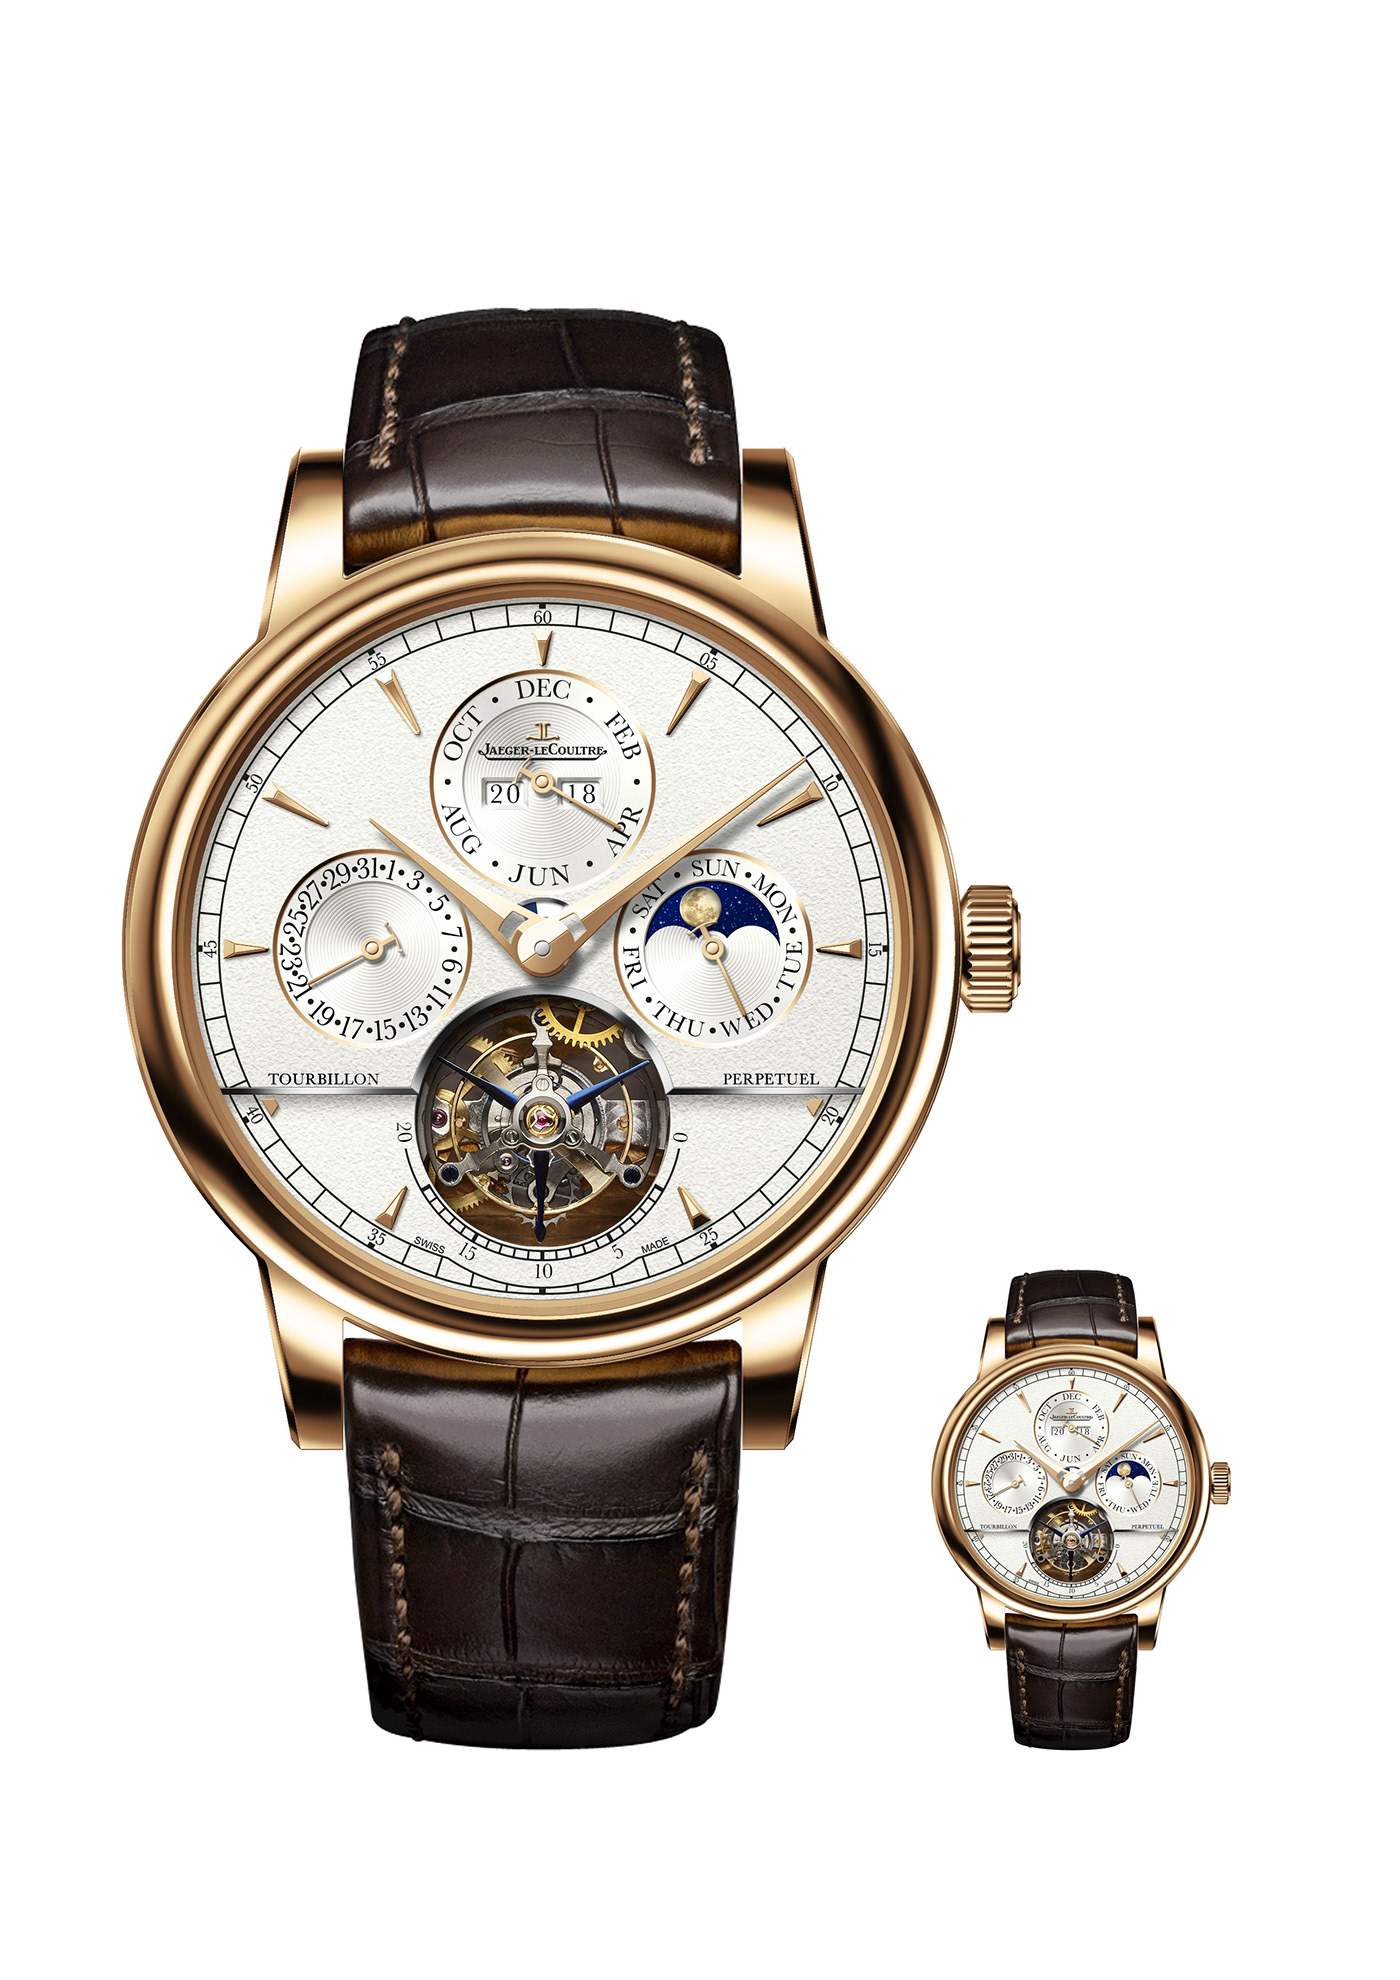 Watches watch luxury watch design horology timepiece horlogerie luxe montre